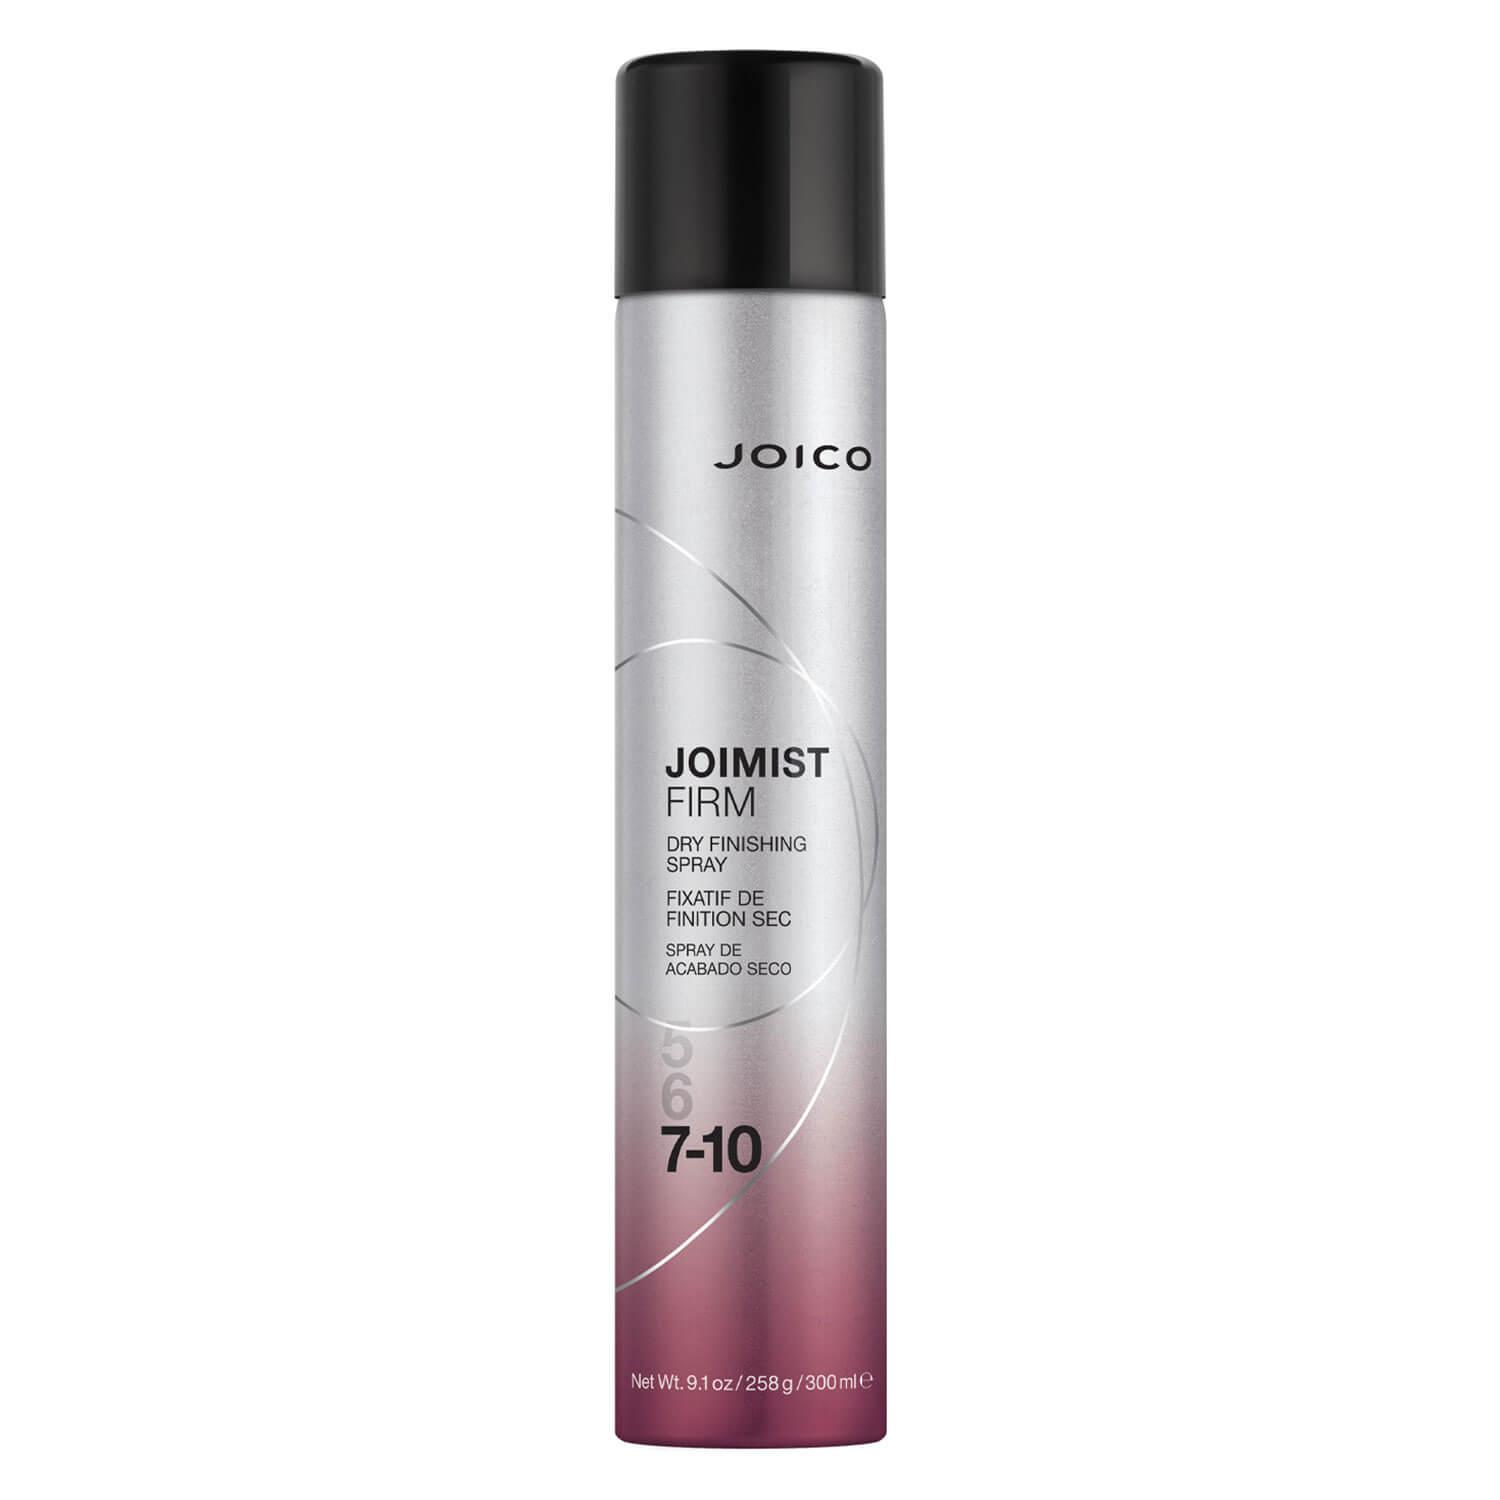 Joico Style & Finish - JoiMist Firm Dry Finishing Spray